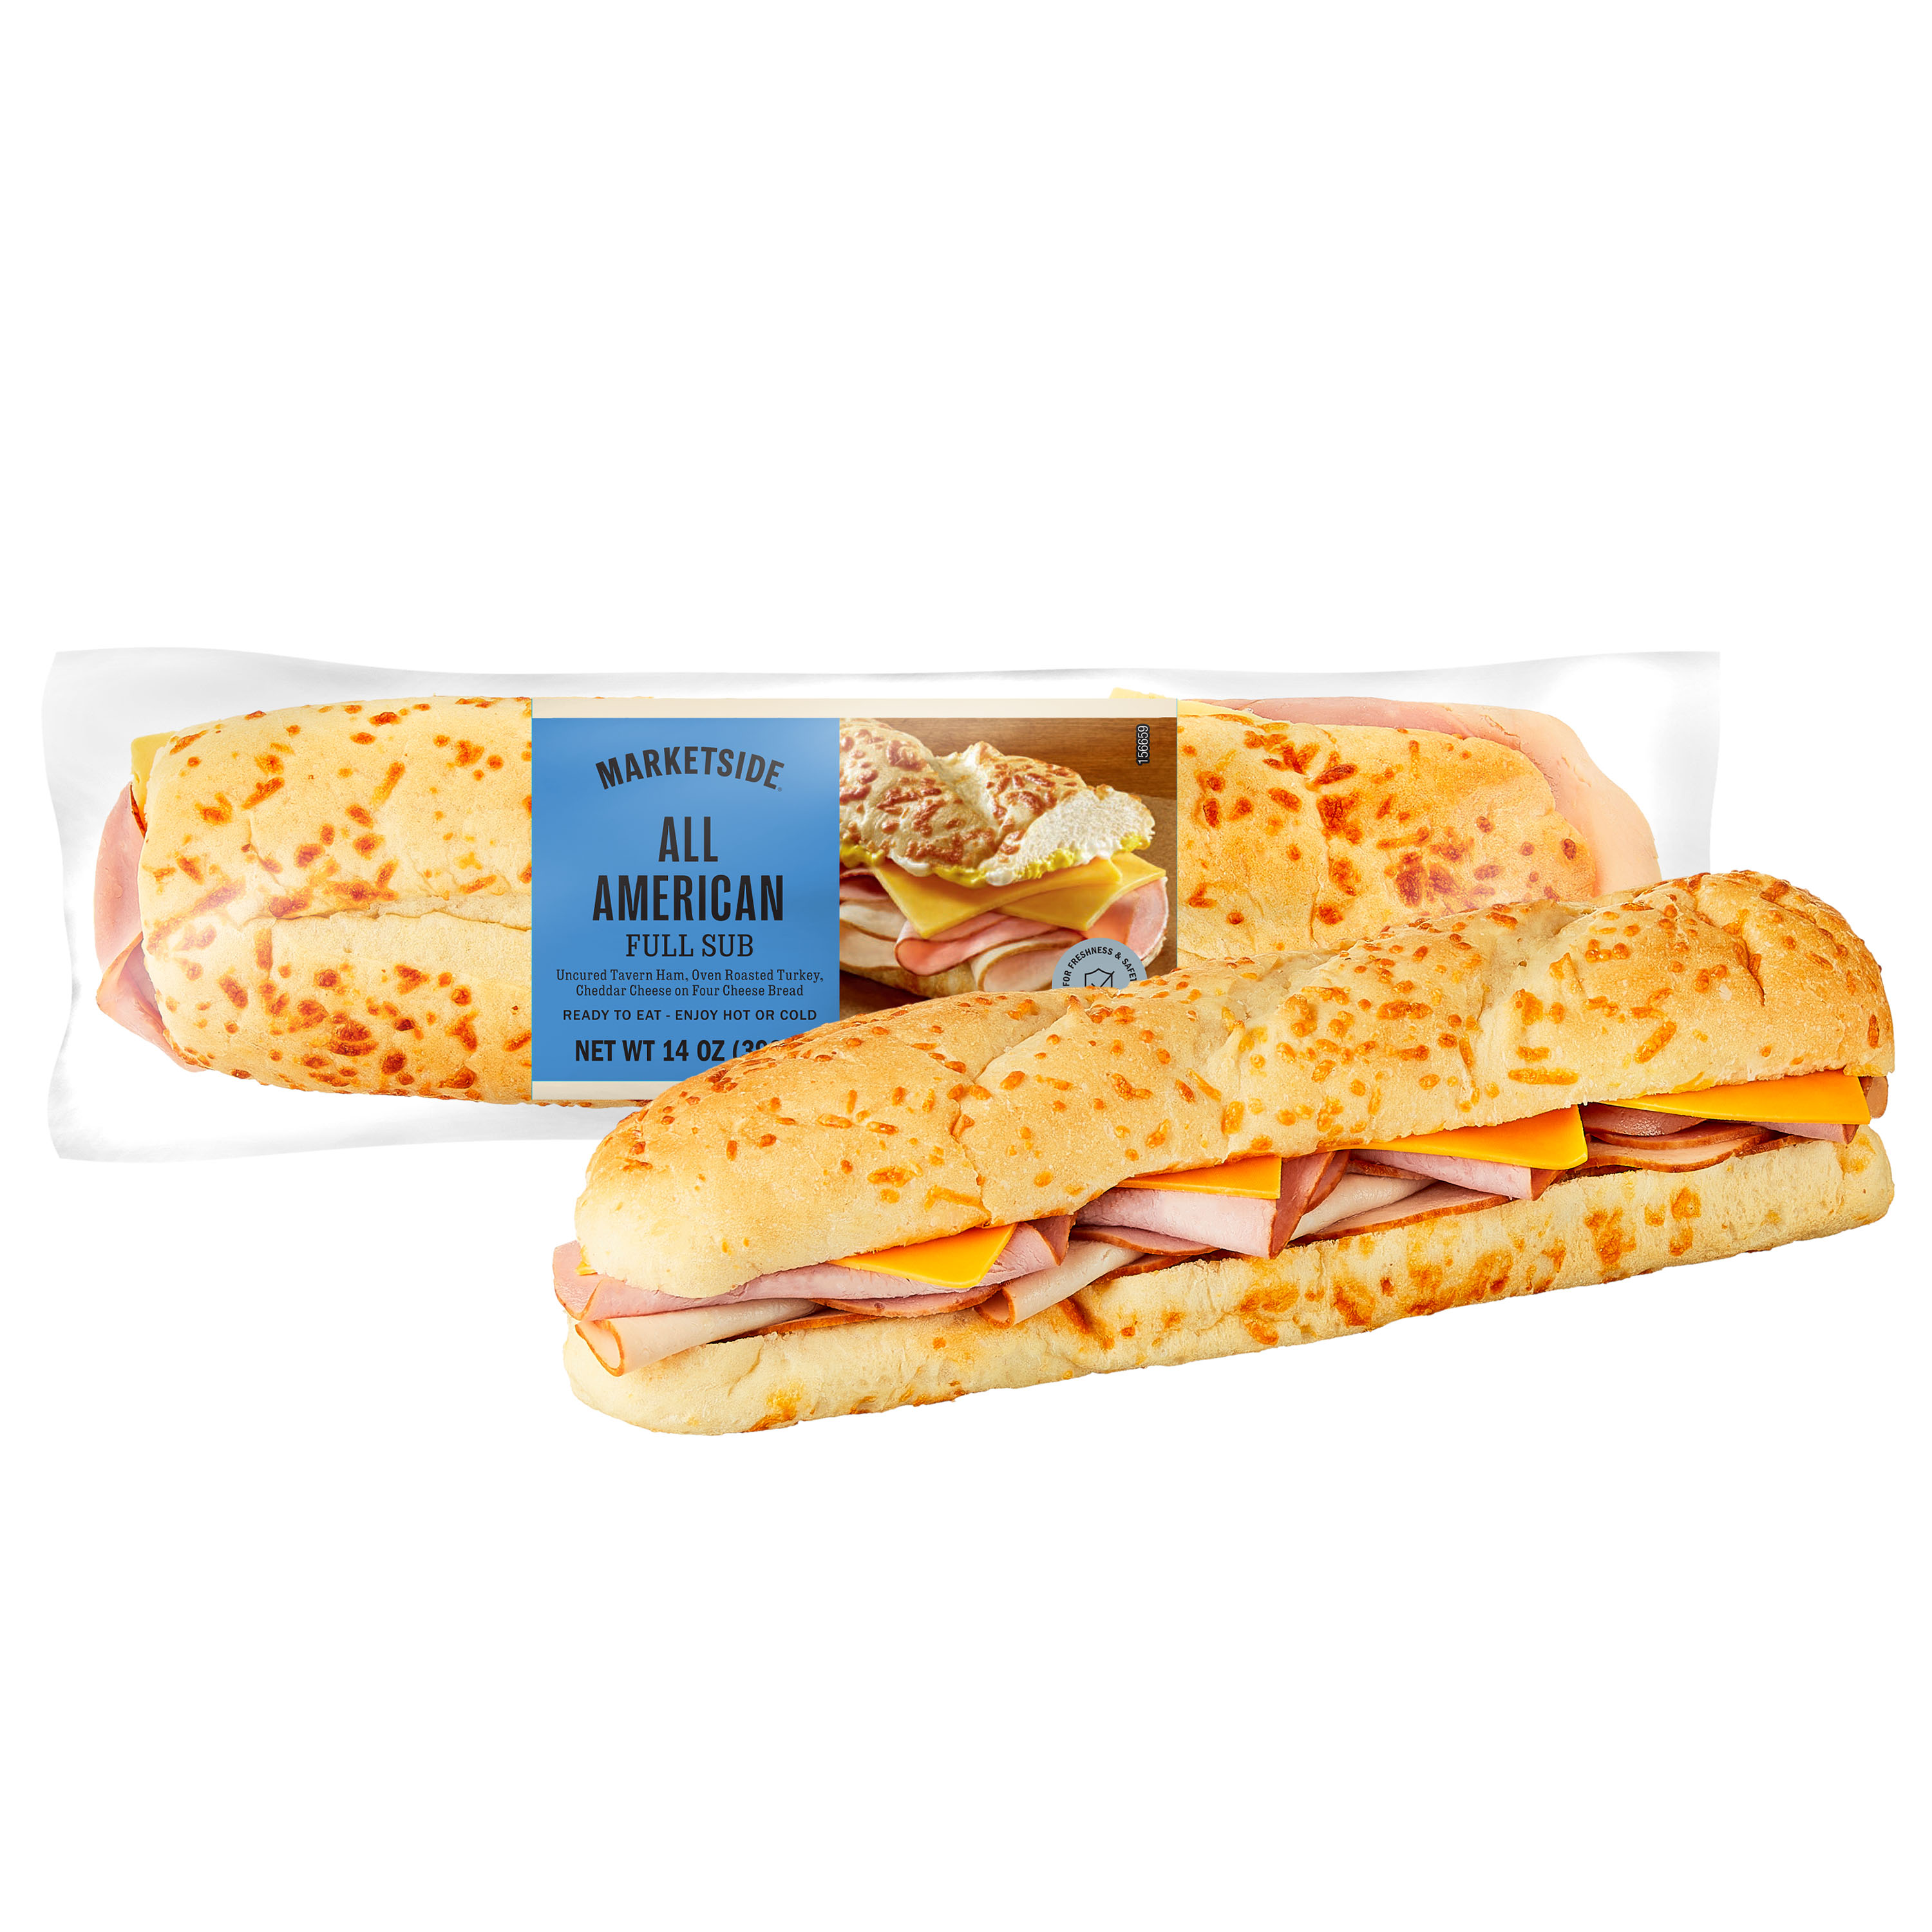 Marketside All American Sub Sandwich, Full, 14 oz, 1 Count (Fresh) - image 2 of 7